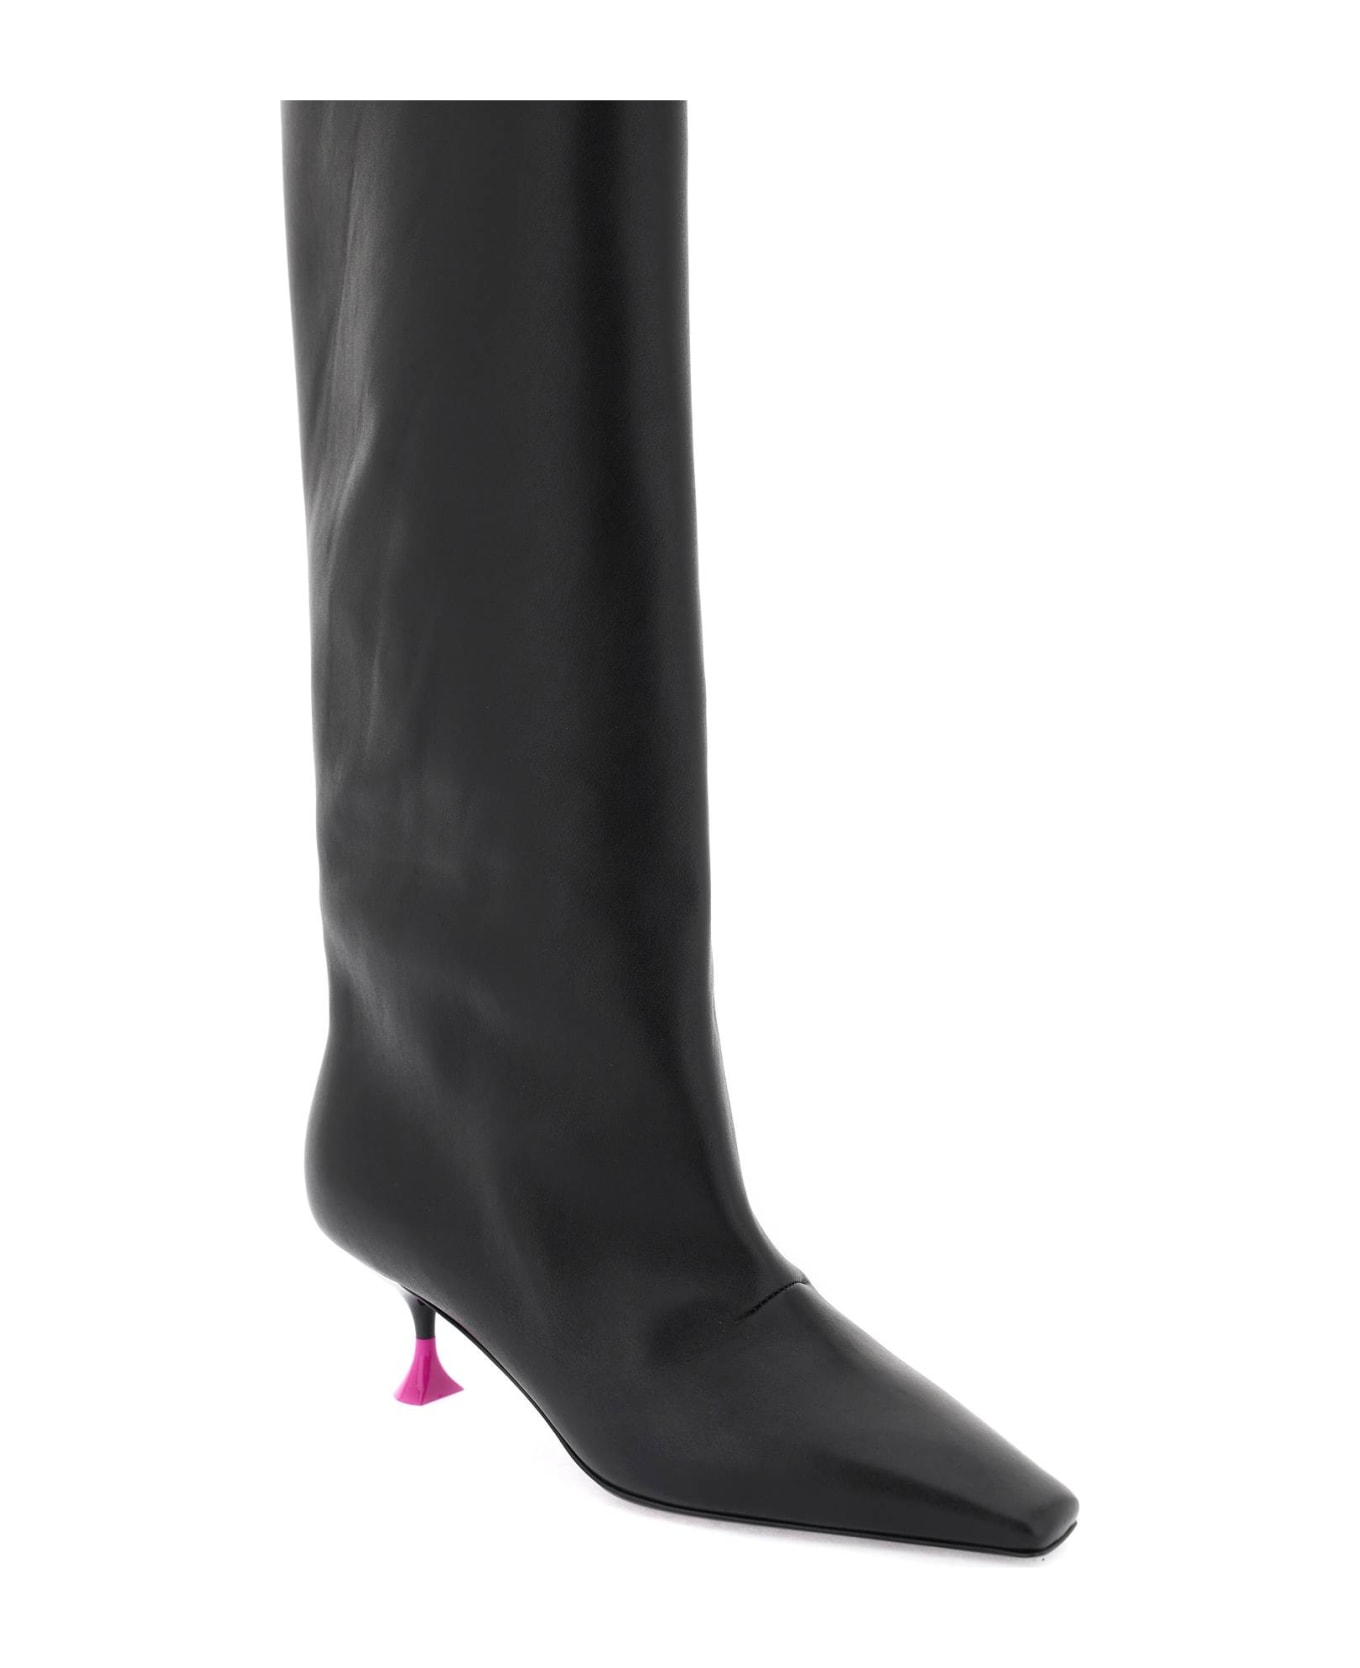 3JUIN 'anita' Boots - OXFORD BLACK (Black) ブーツ